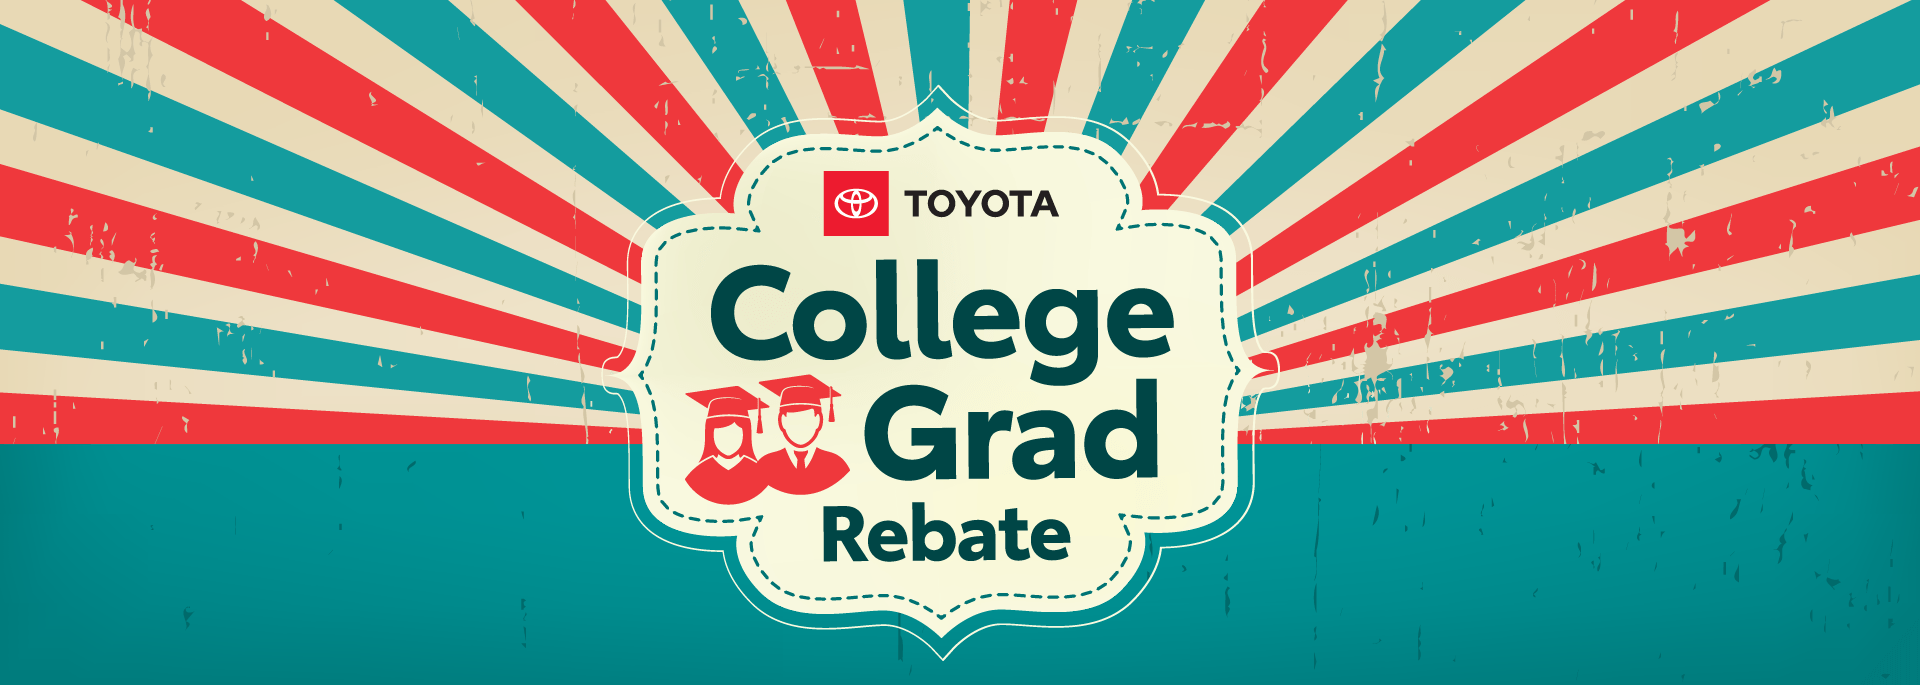 Ask about Toyota Graduate Rebates near Colorado Springs CO